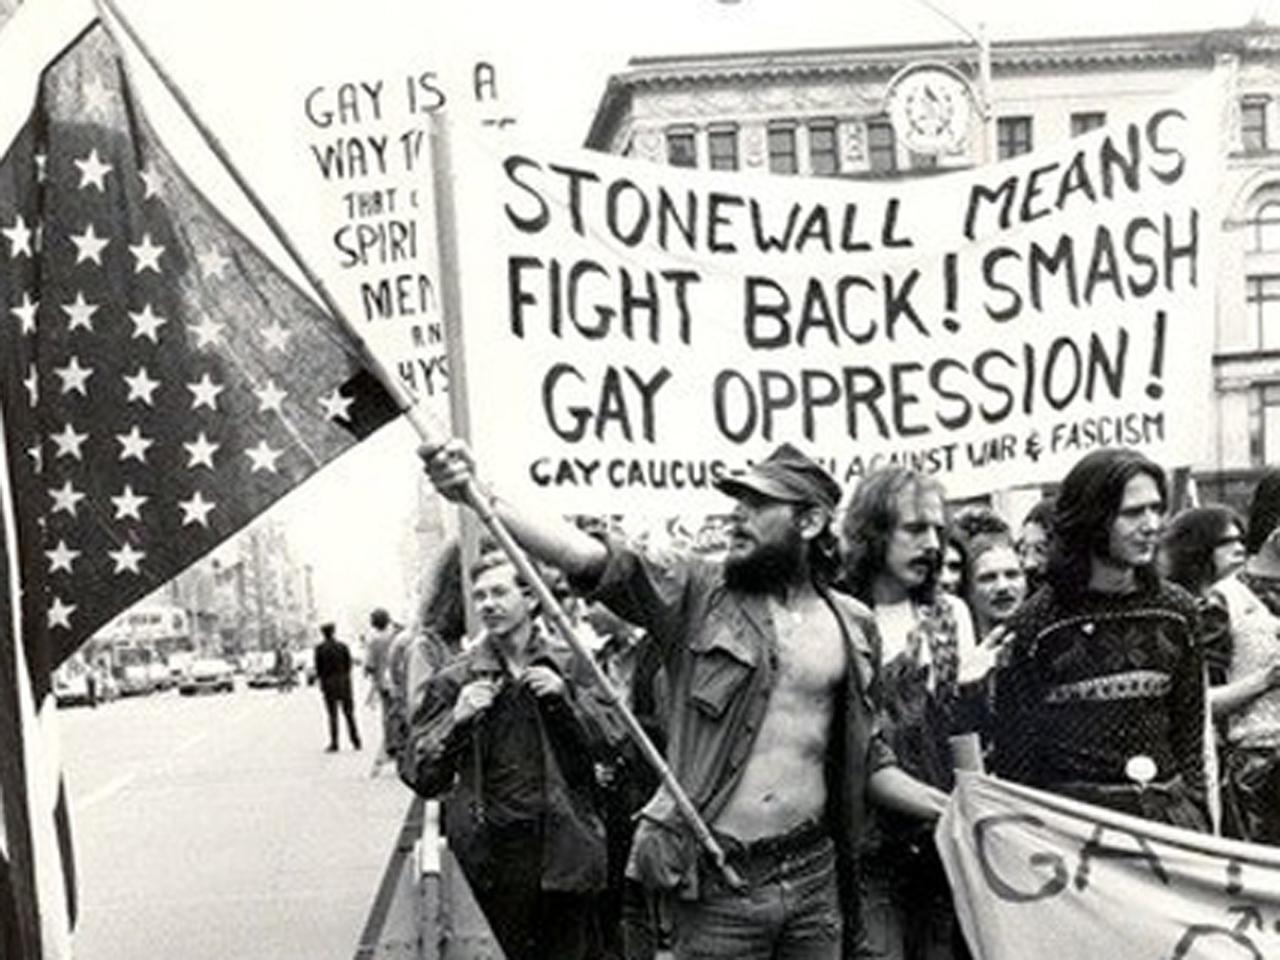 Stonewall c. 1969